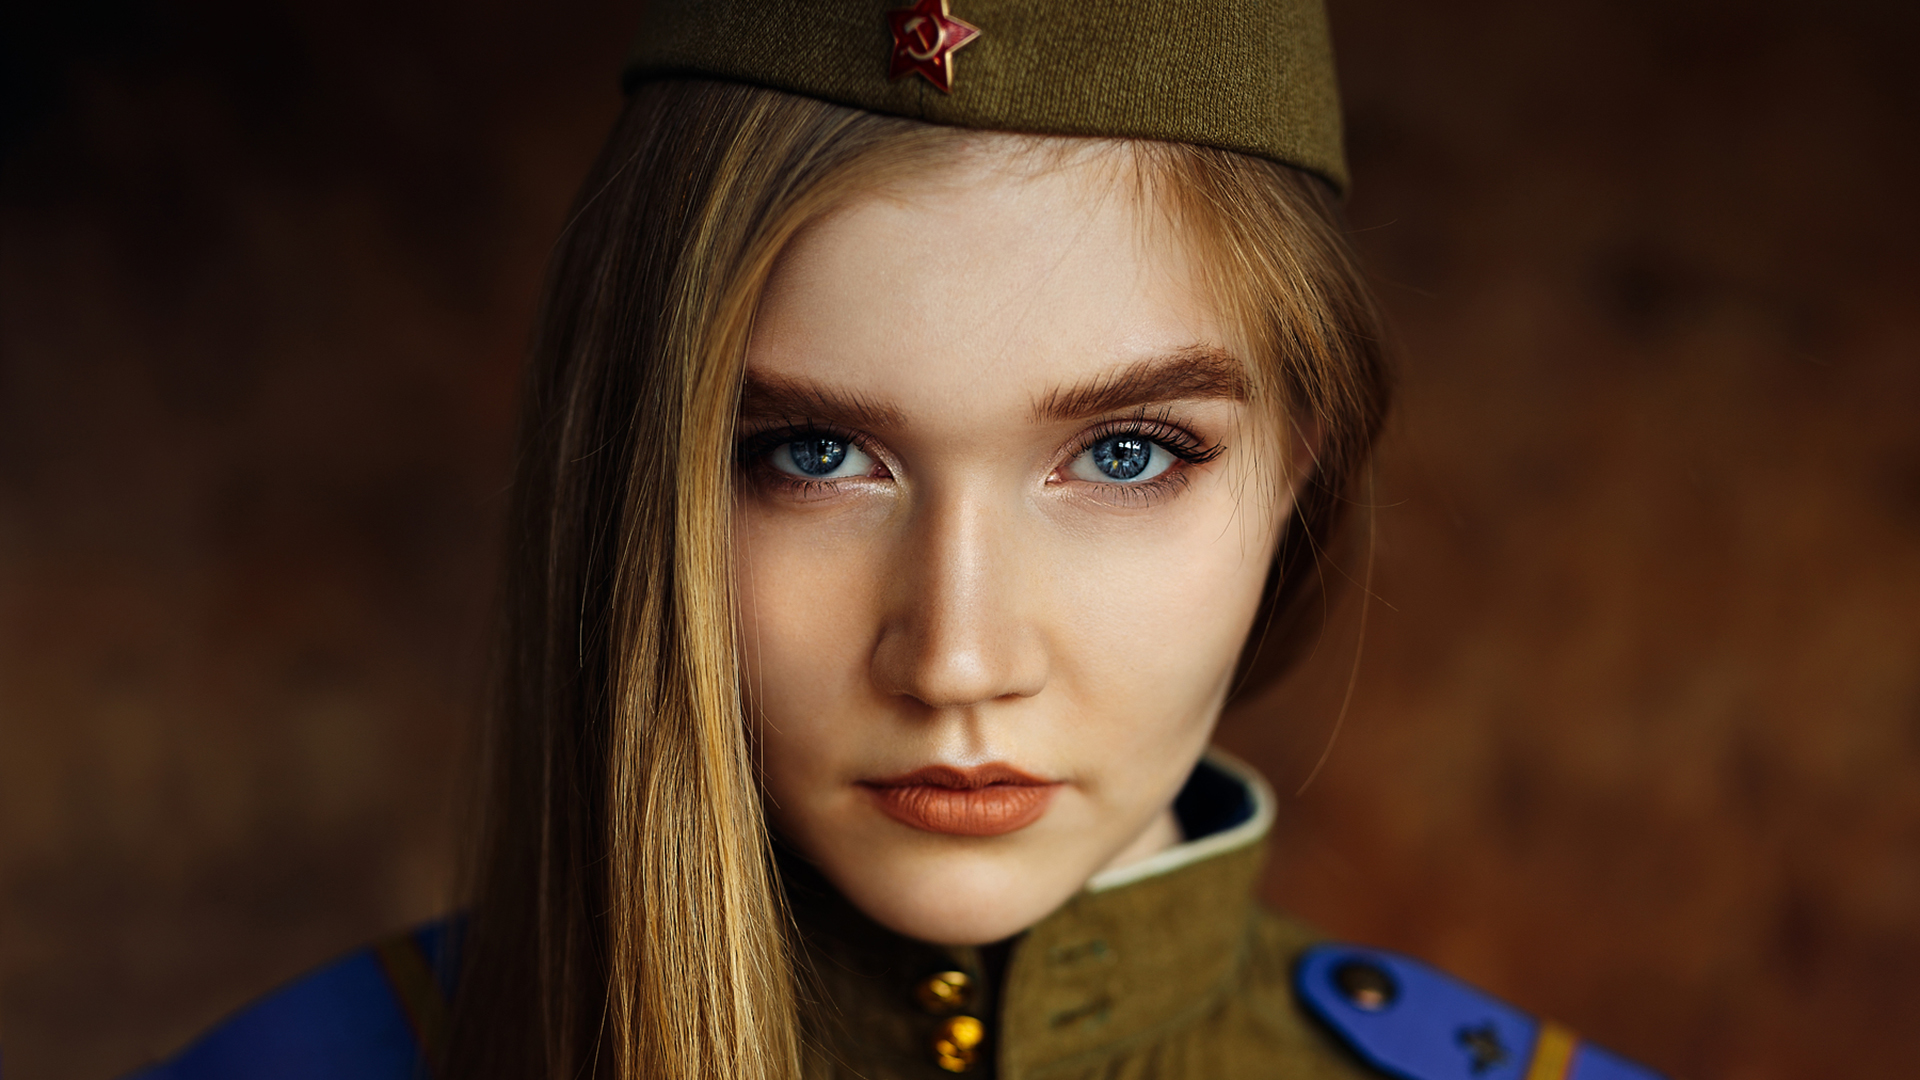 Women Blonde Face Portrait Blue Eyes Hammer And Sickle Soviet Union Uniform 1920x1080